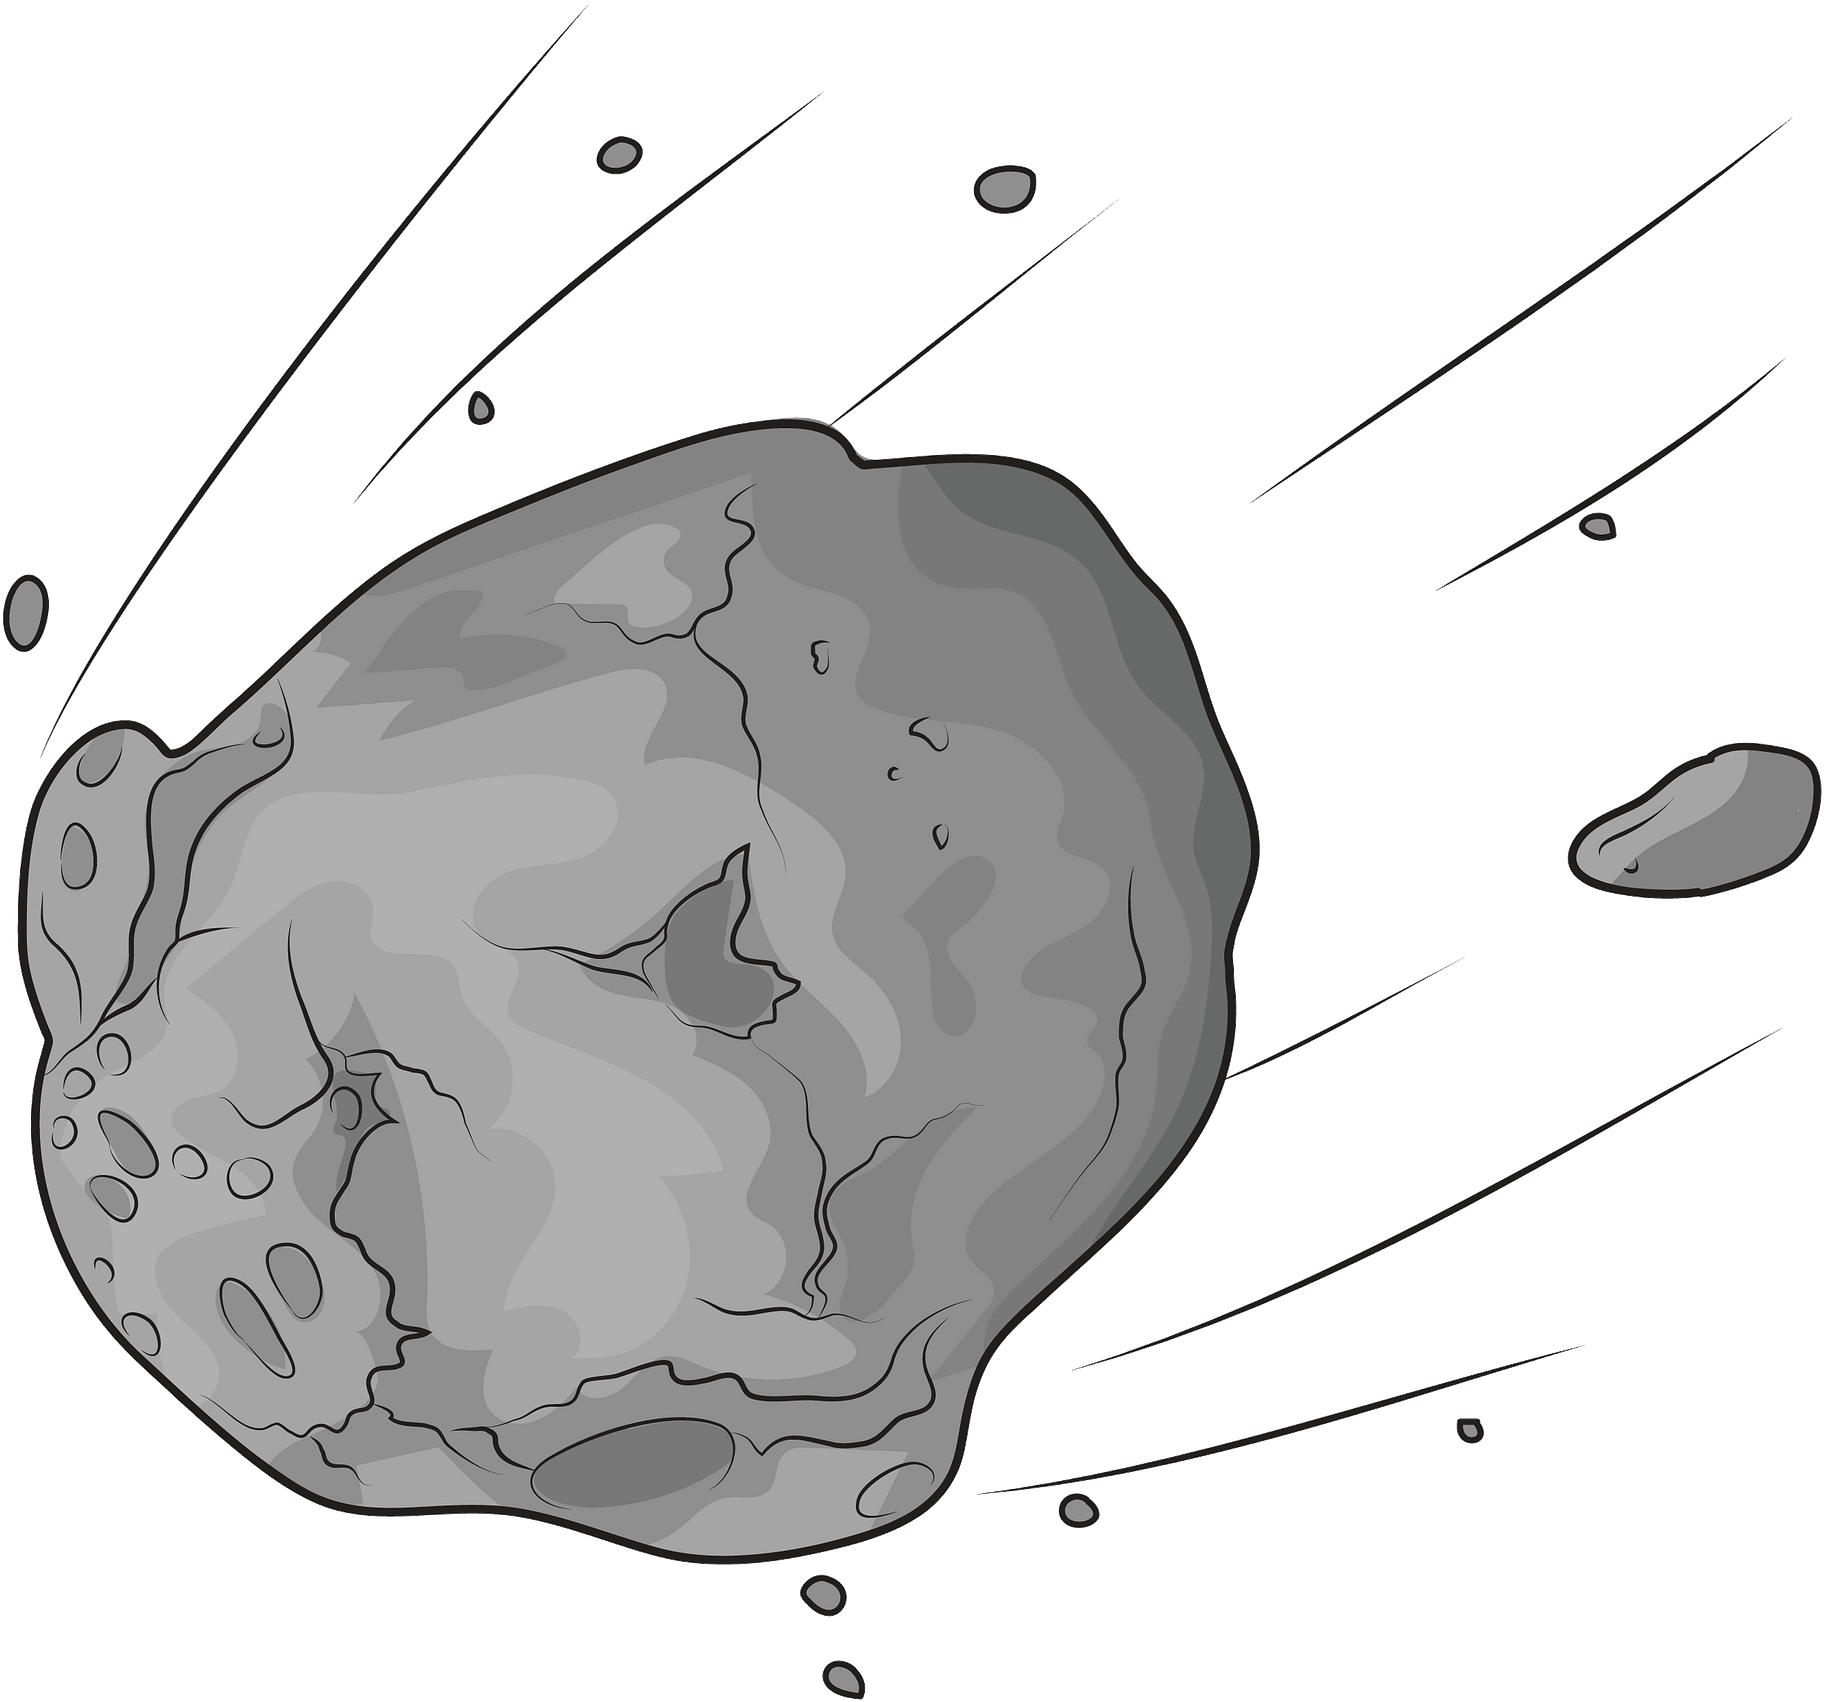 Астрономия - Космос - Солнечная система - Пояс астероидов, Asteroid Belt - Метеоритика, Метеорная астрономия, Meteoric Astronomy - Метеор, Метеорит, Метеорный поток - Пегасиды, Pegasids - Вулканоиды, Volcanoids - День астероида 30 июня